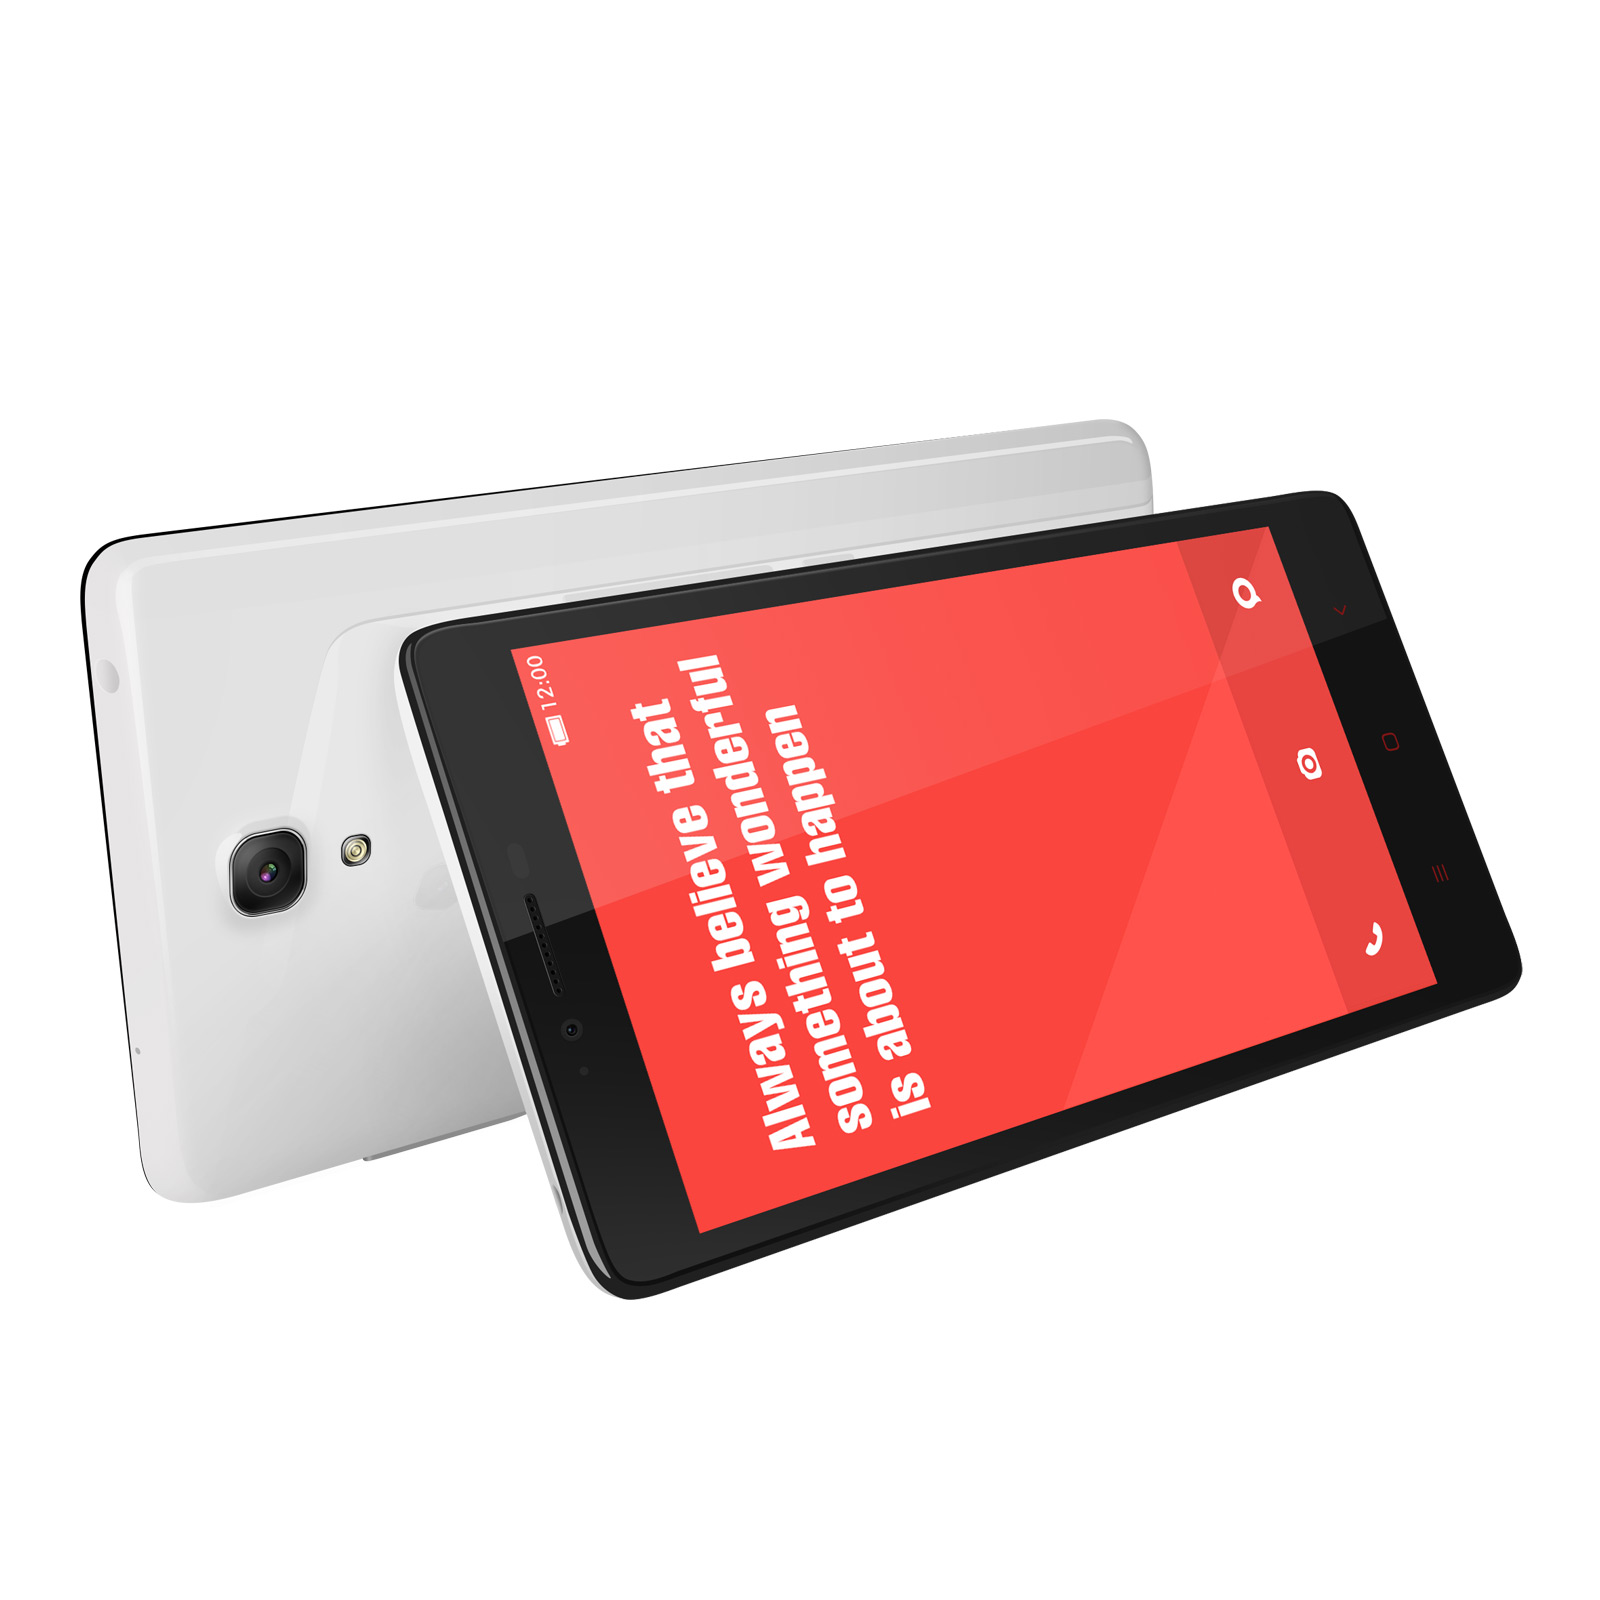 [ROOT] Cara ROOT Xiaomi Redmi Note Tanpa PC